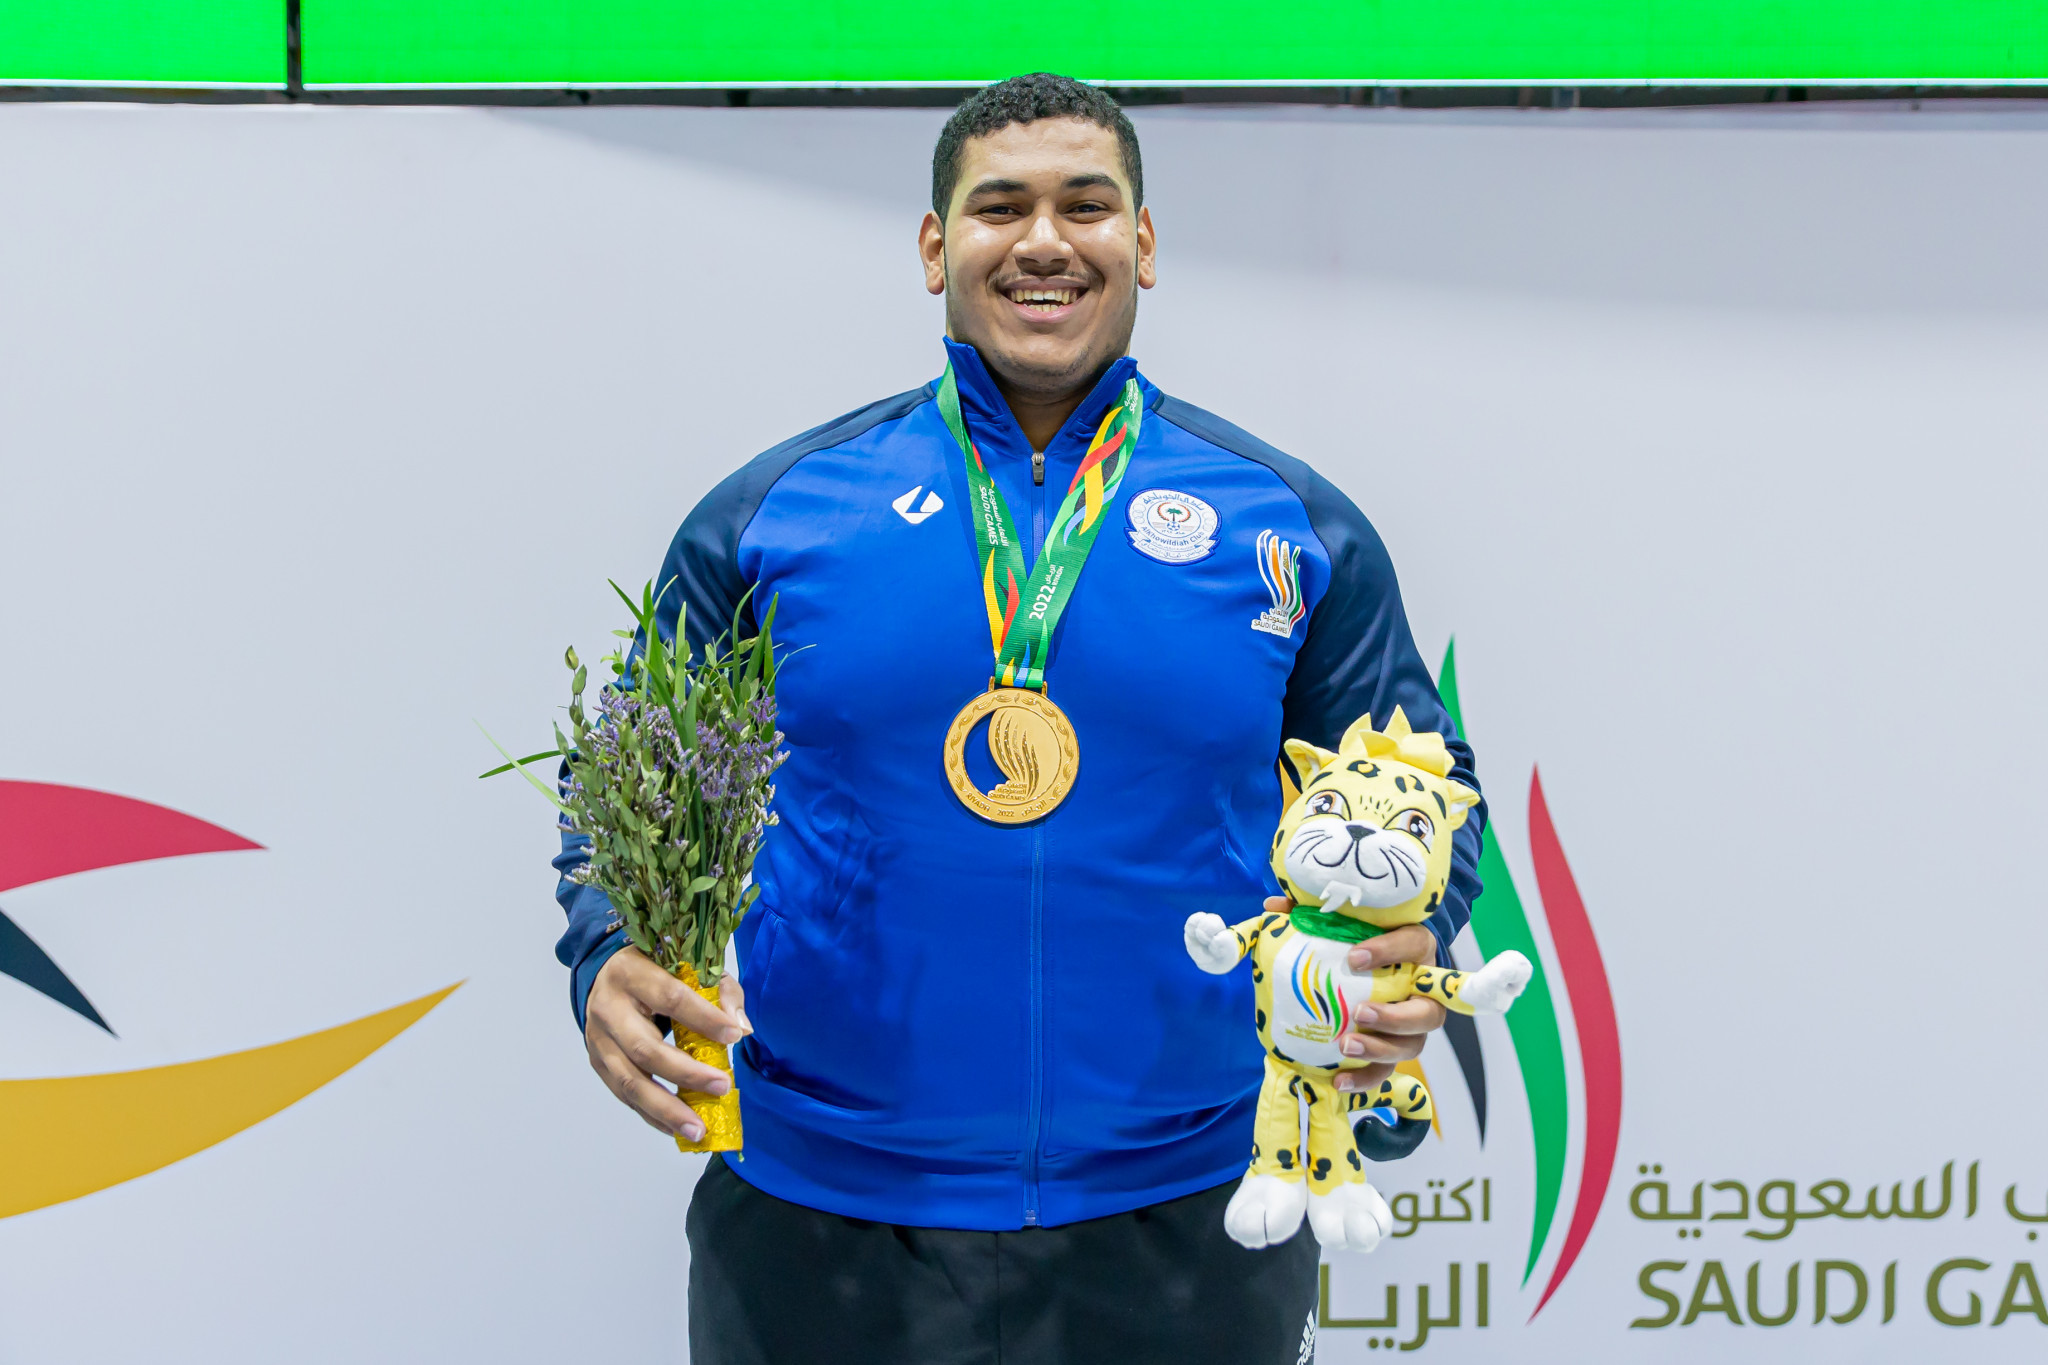 Hassan Al-Radhi won the last weightlifting gold medal ©Saudi Games